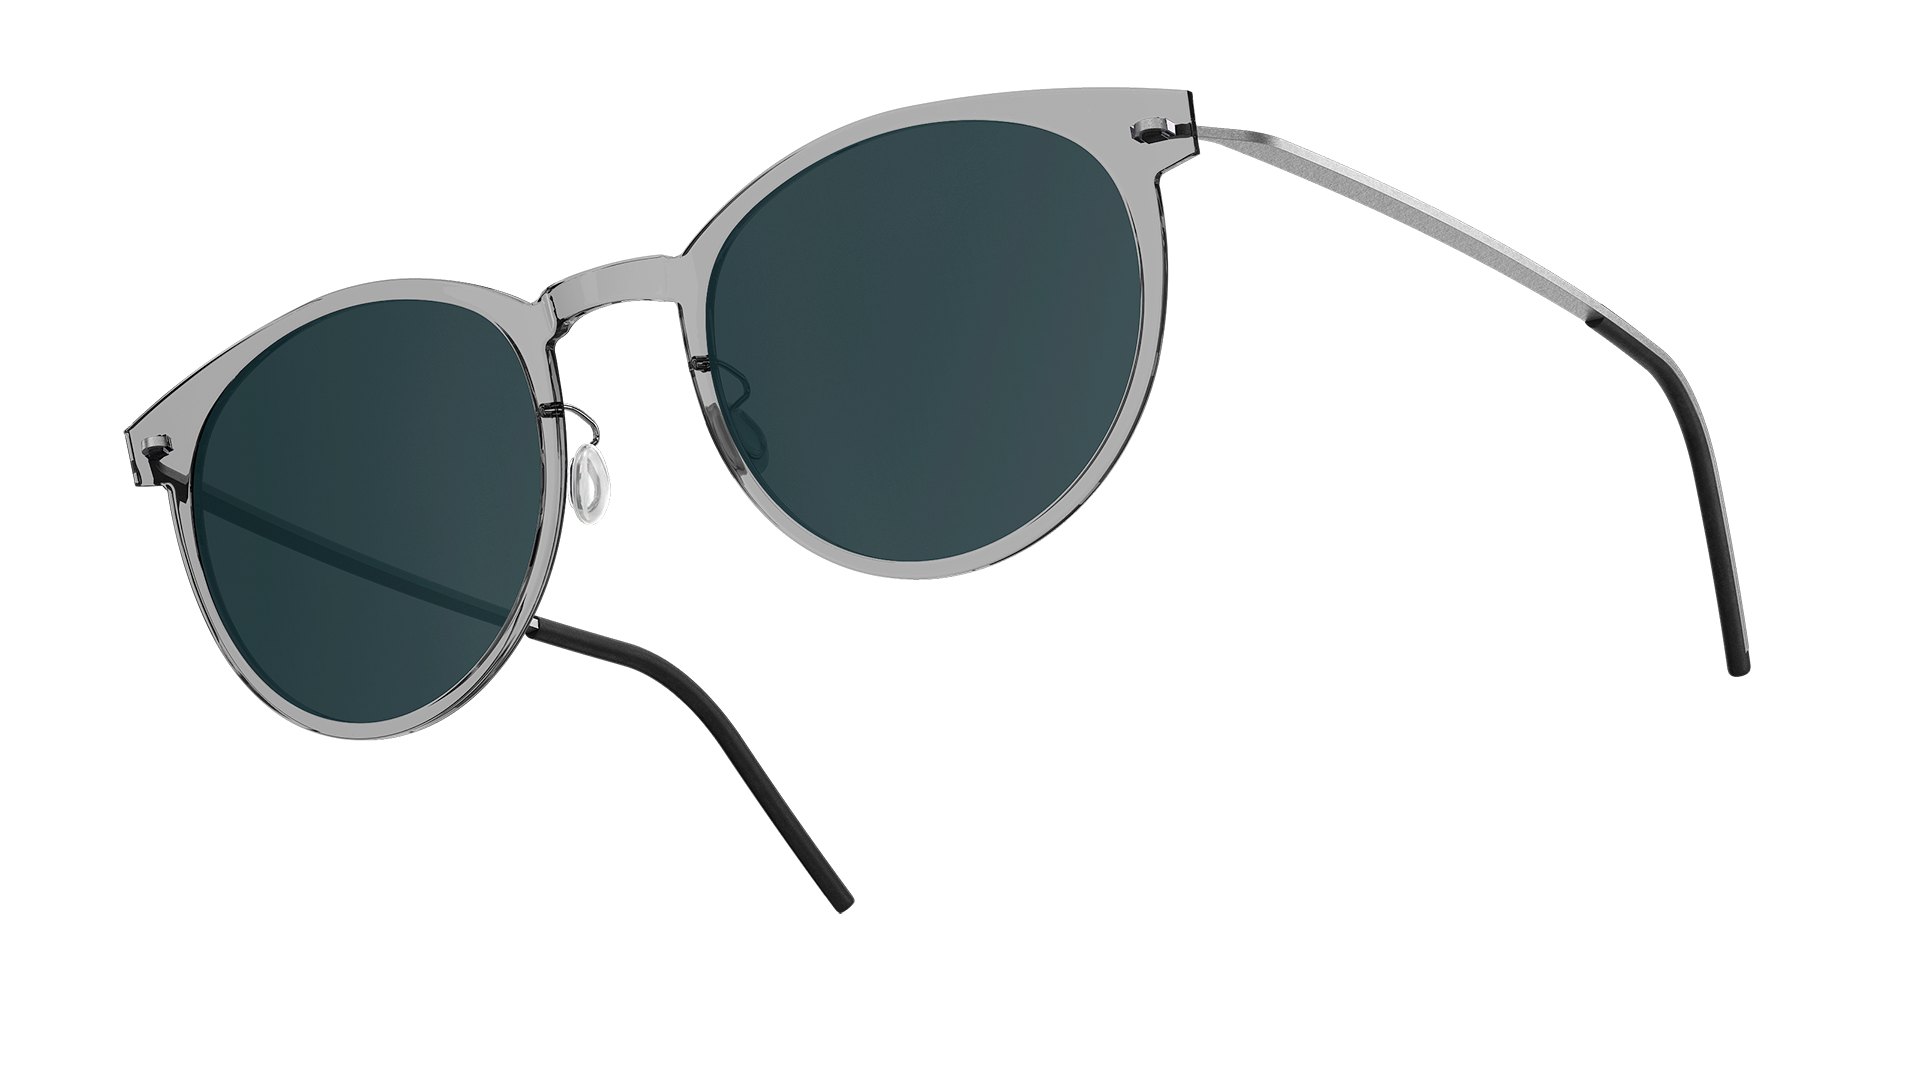 LINDBERG sun titanium Model 8310 transparent grey frame sunglasses with blue grey lenses SL43